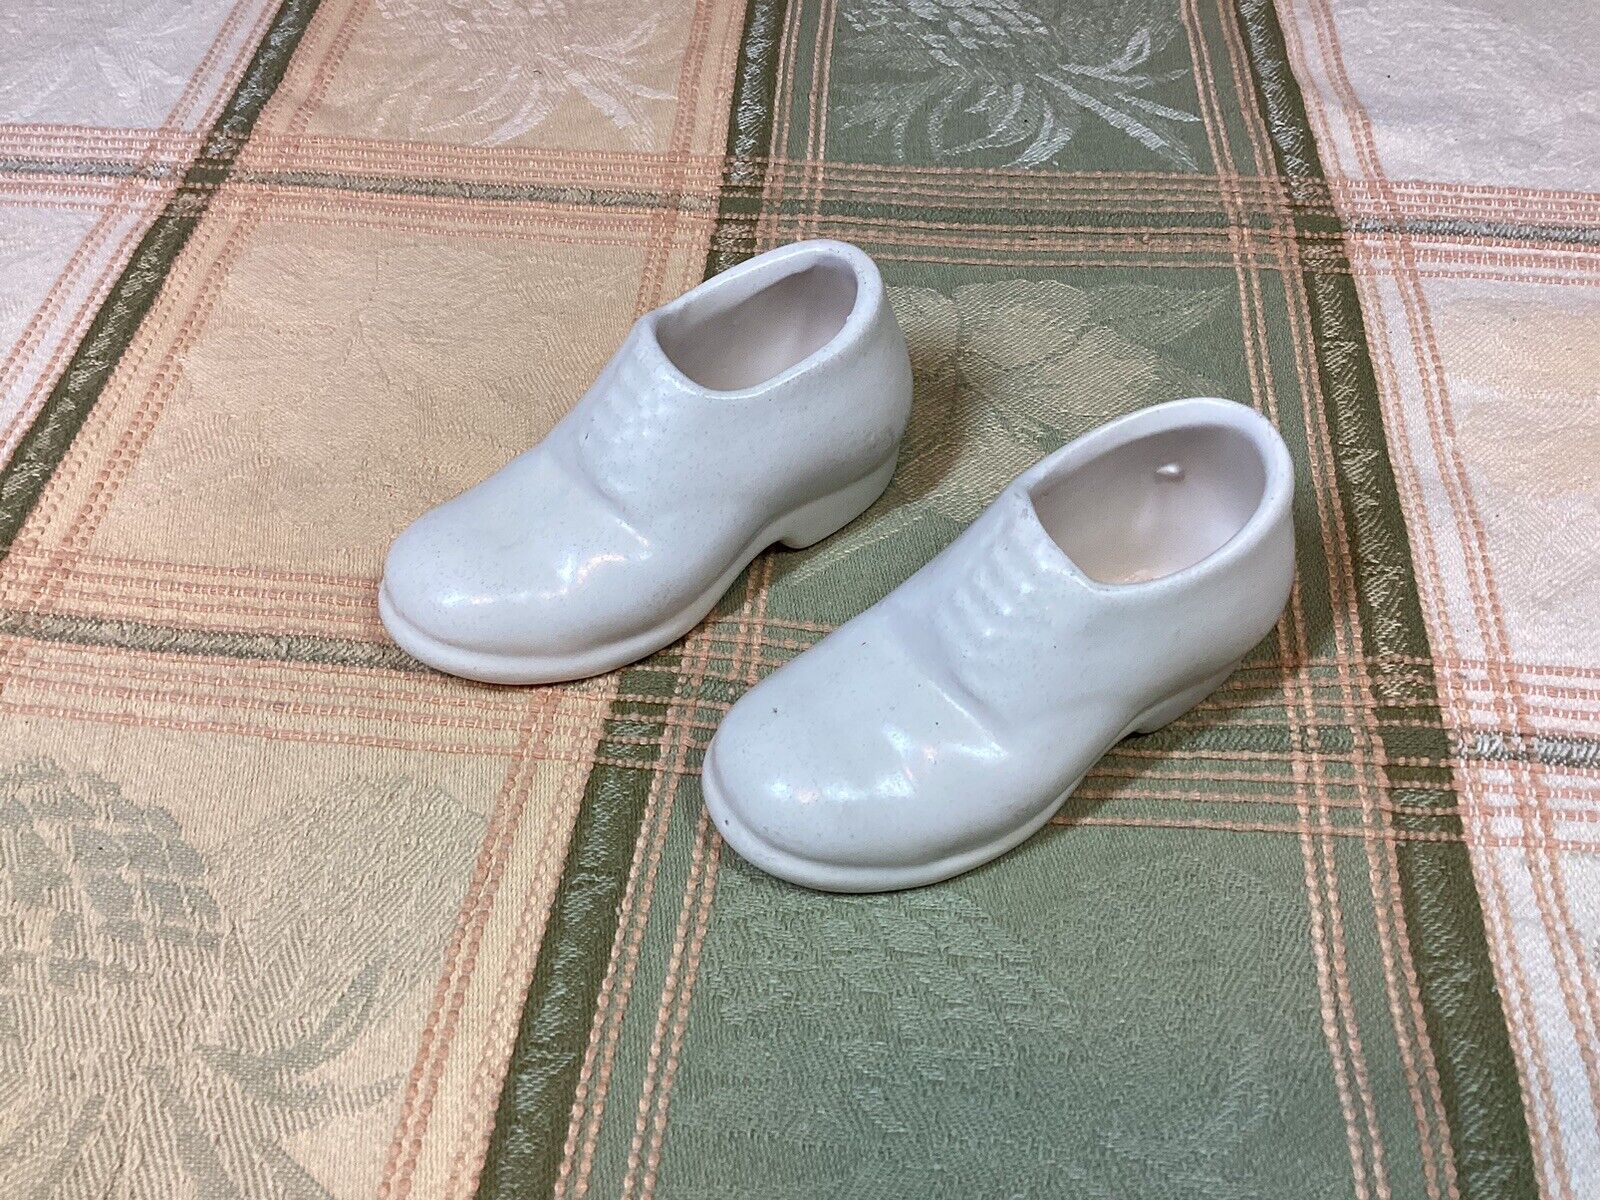 2 Vintage White Ceramic Shoe Planters or Decorator Pieces